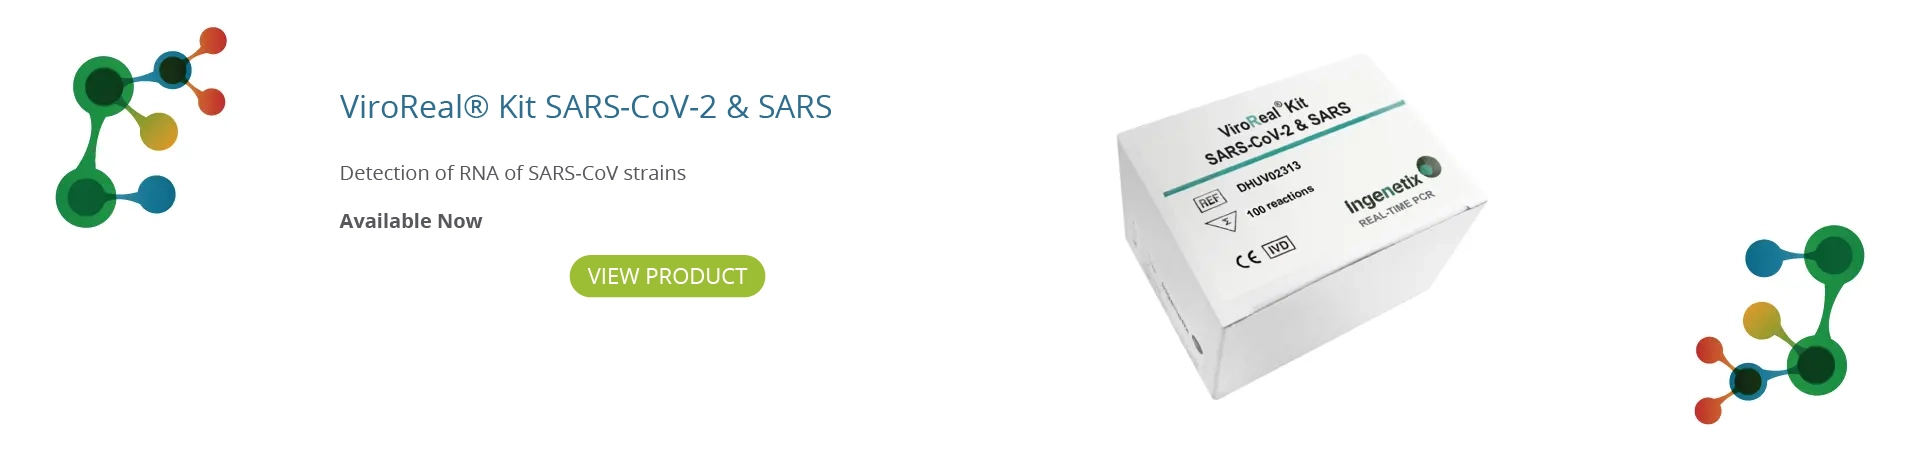 ViroReal® Kit SARS-CoV-2 & SARS